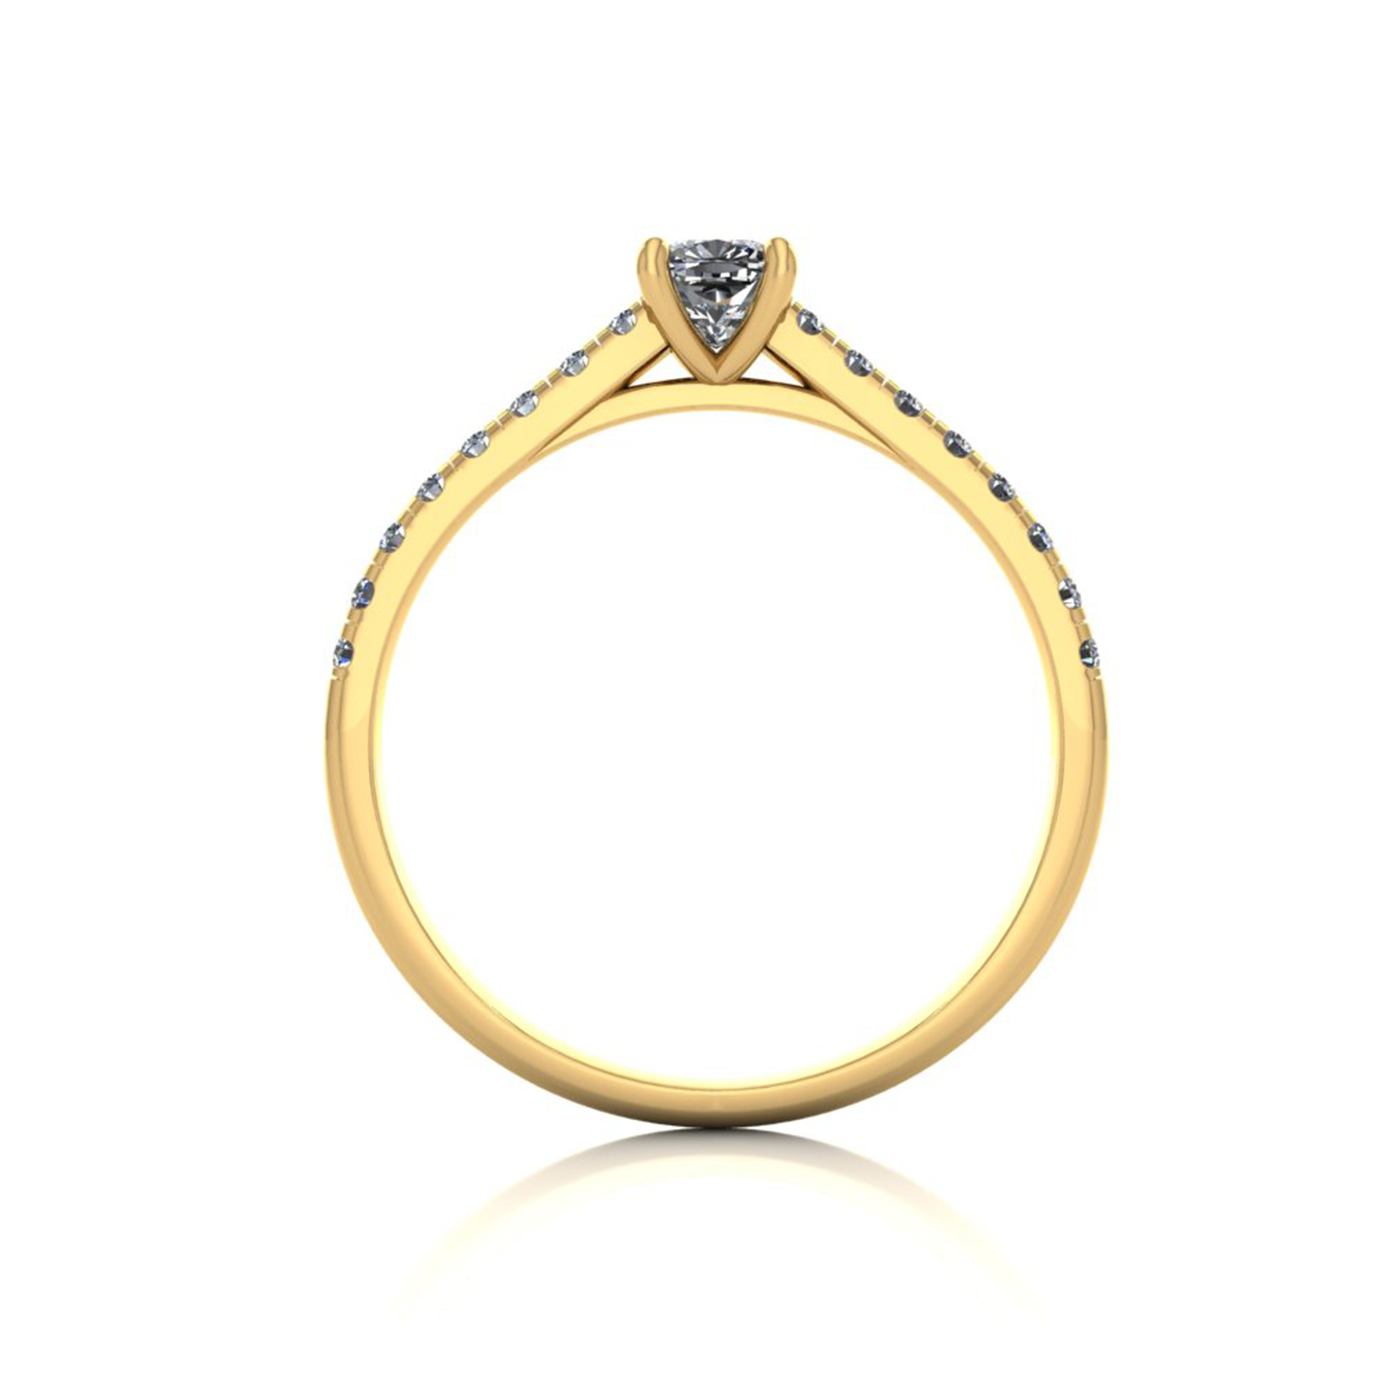 18k yellow gold  0,30 ct 4 prongs cushion cut diamond engagement ring with whisper thin pavÉ set band